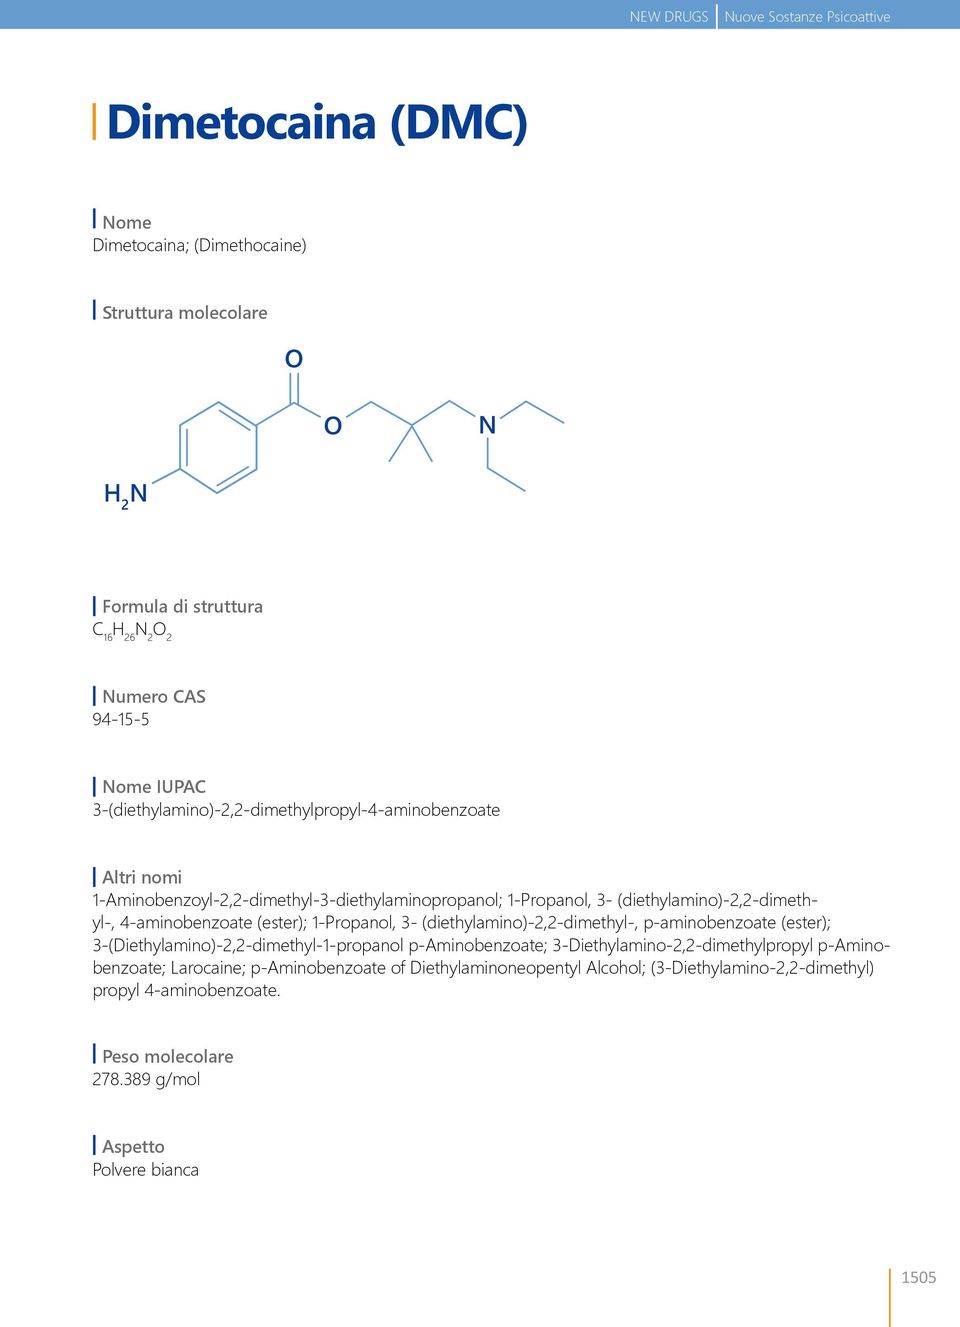 4-aminobenzoate (ester); 1-Propanol, 3- (diethylamino)-2,2-dimethyl-, p-aminobenzoate (ester); 3-(Diethylamino)-2,2-dimethyl-1-propanol p-aminobenzoate;